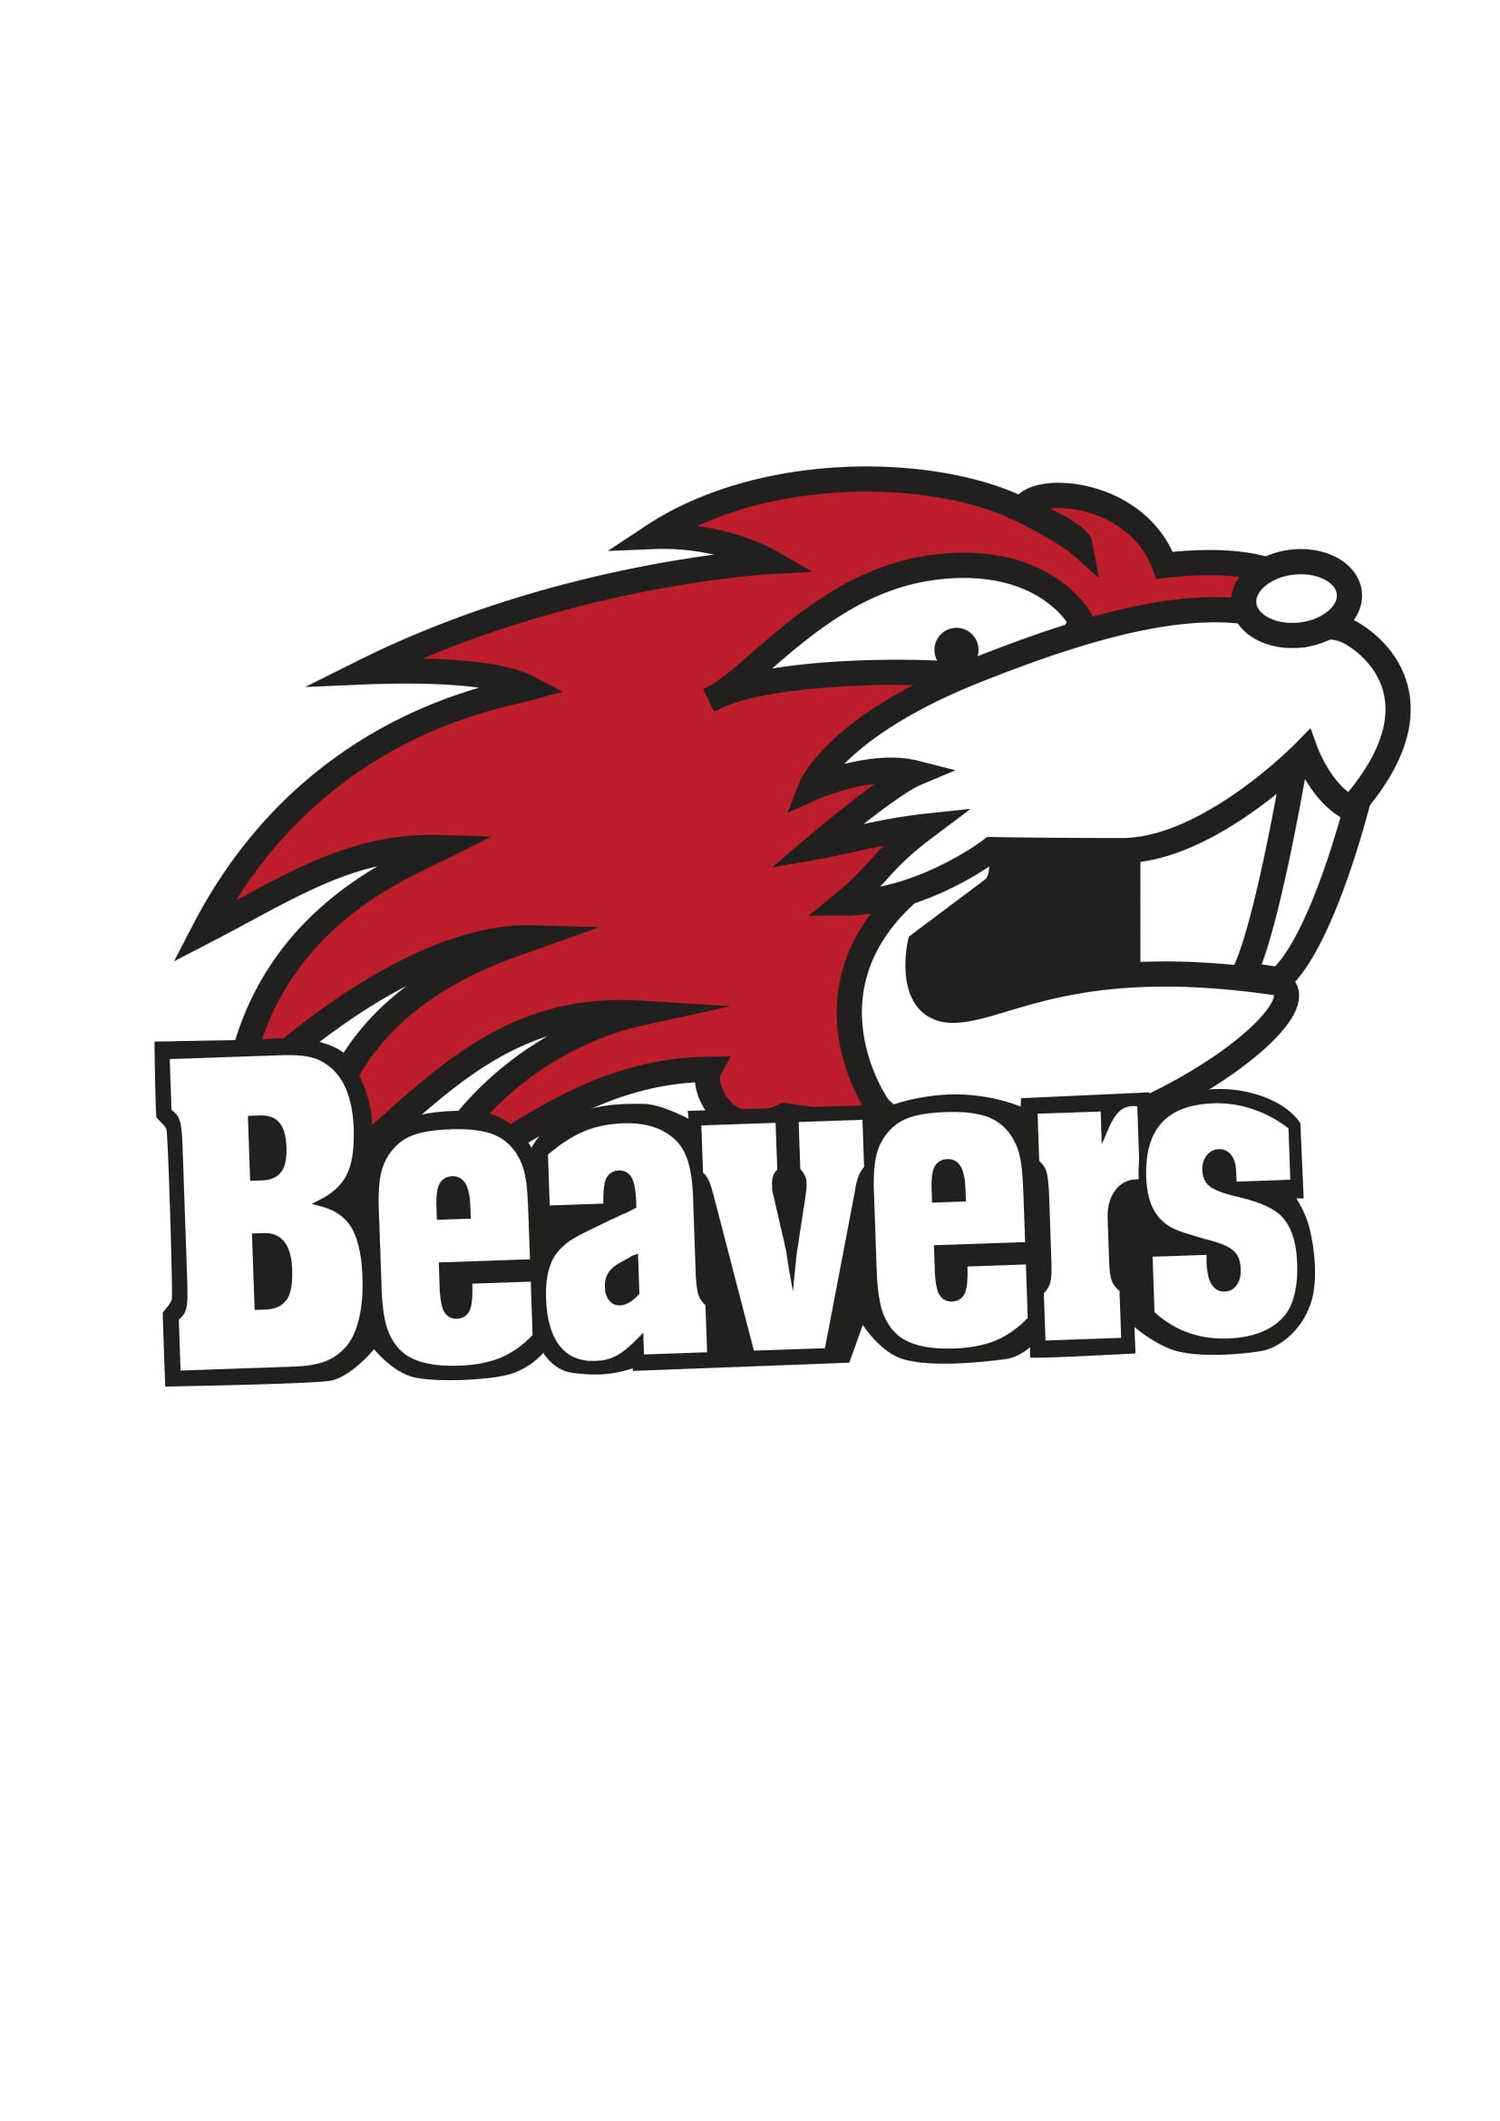 Beavers Basketball Club